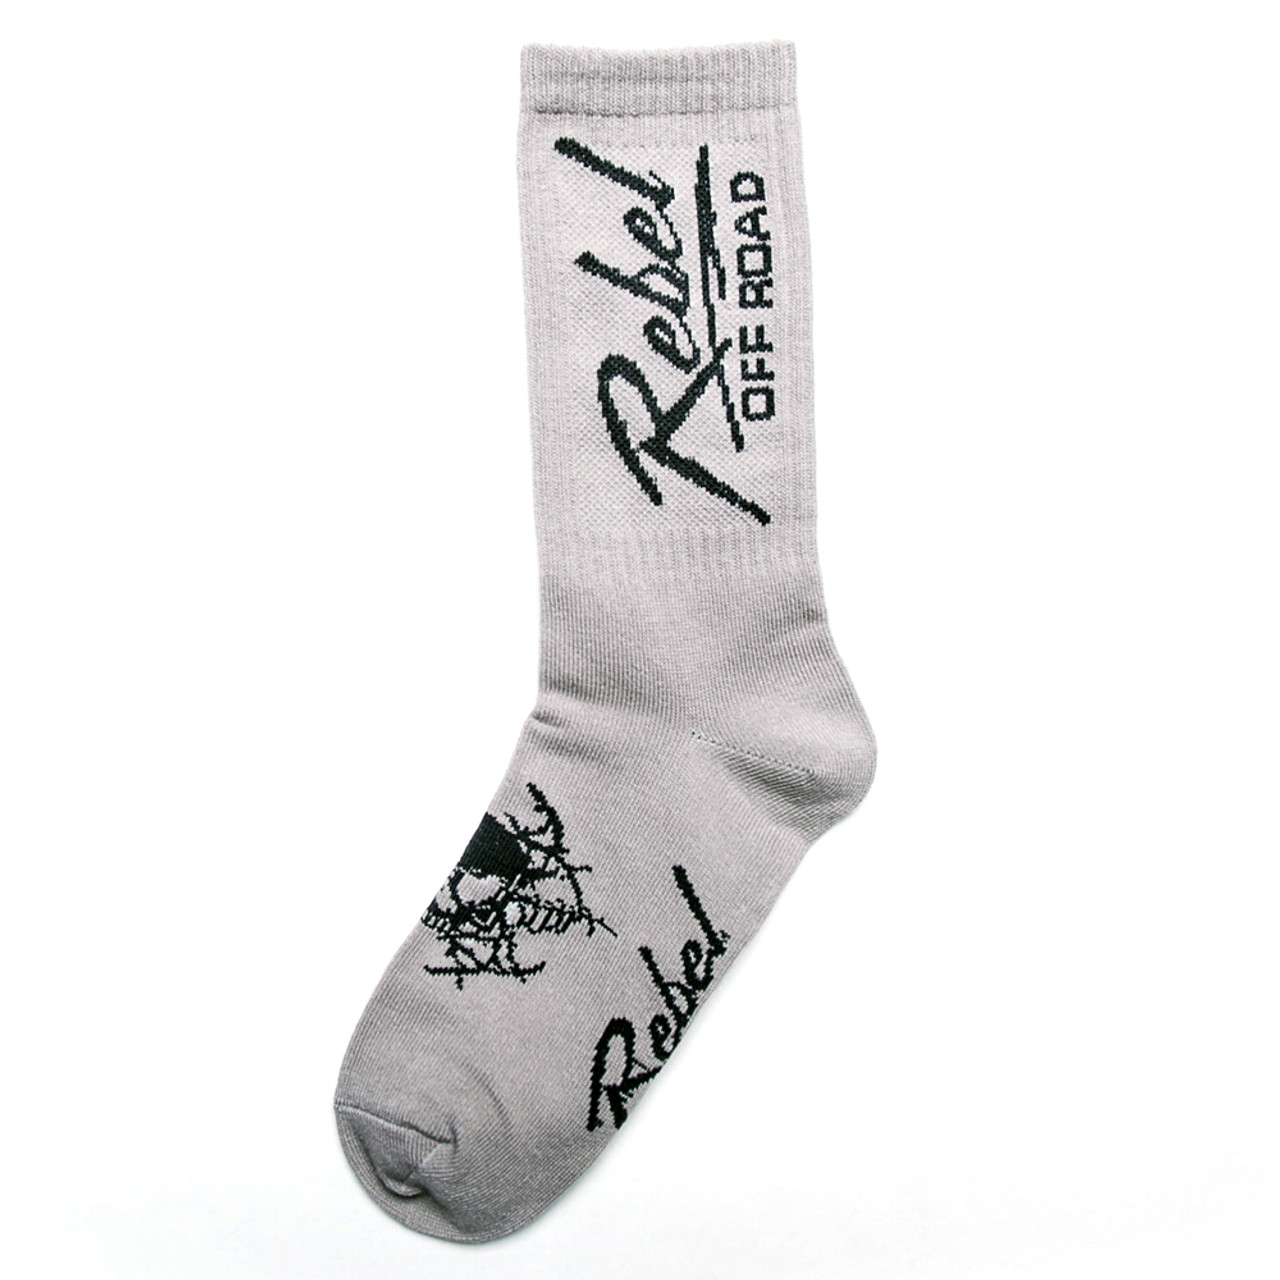 Rebel Off Road All-Terrain Women's Socks, Gray, Miami Logo